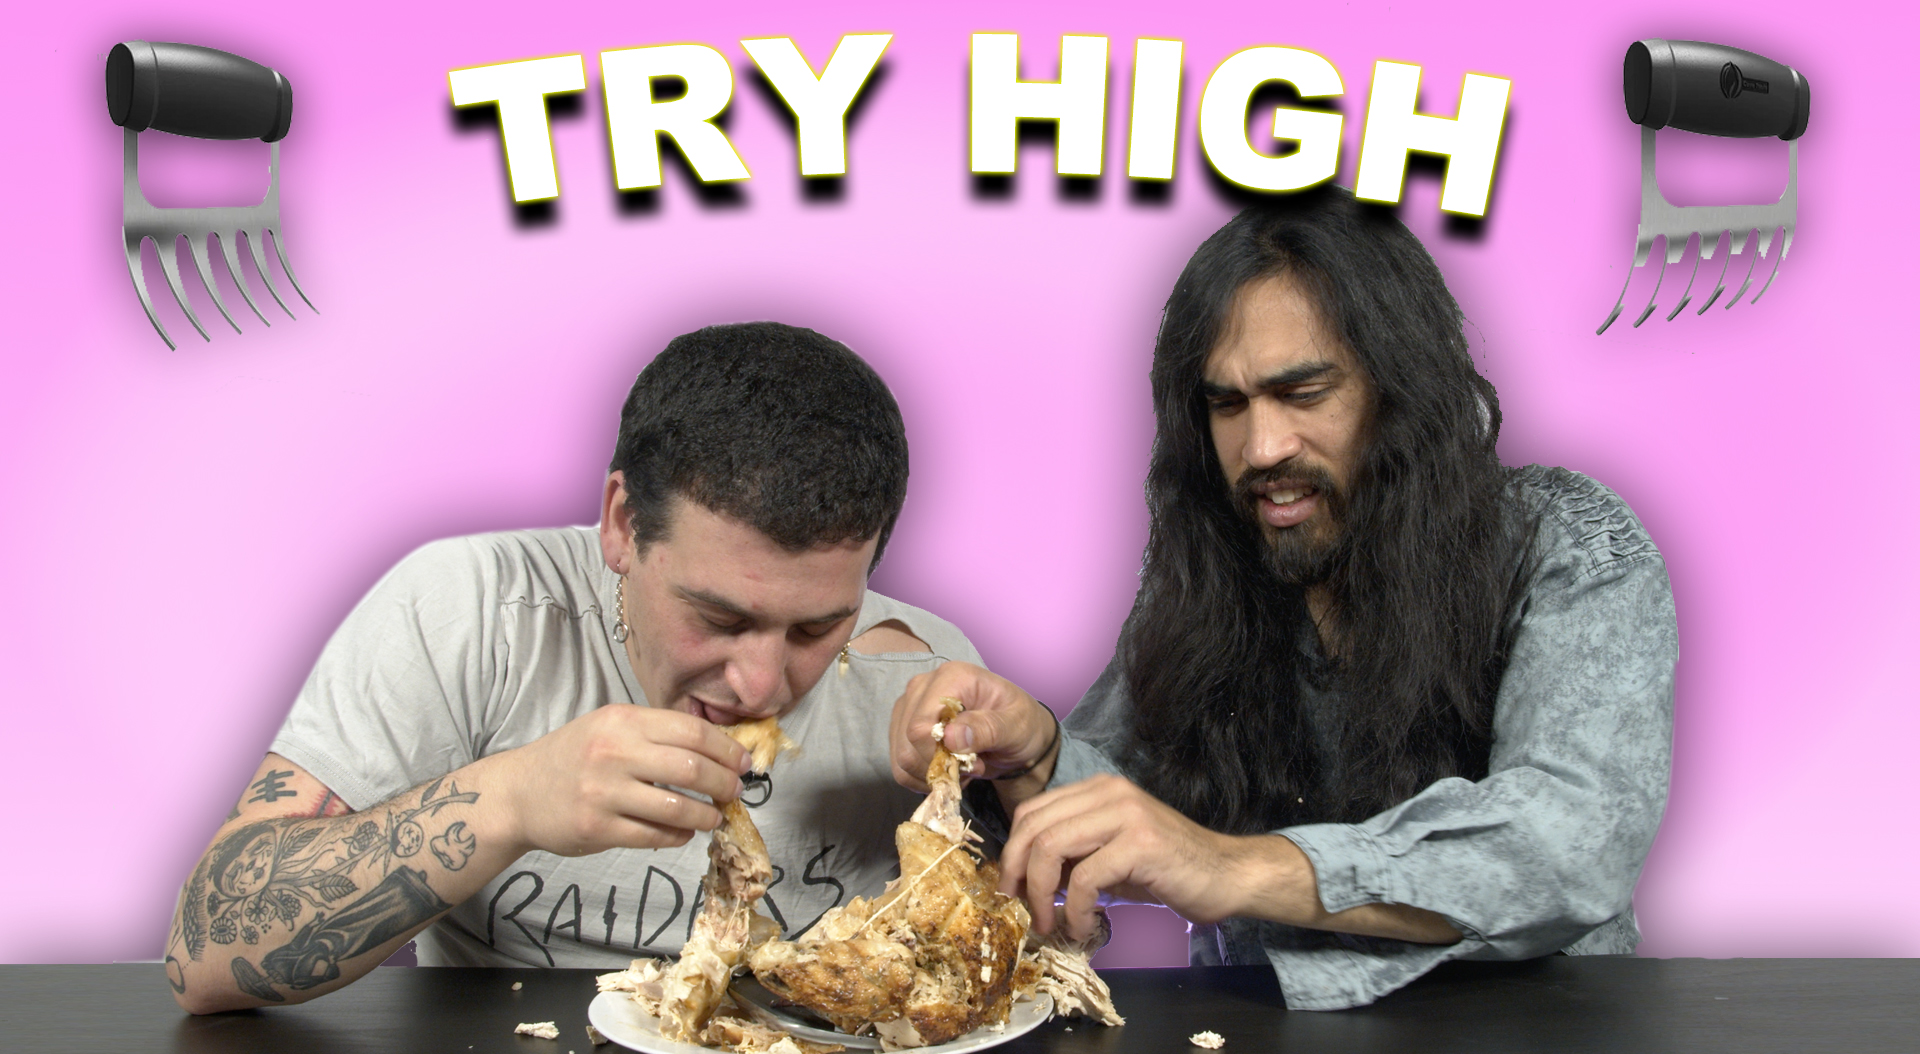 Dalton & Makal Tear Into a Rotisserie Chicken Like Lit Bears | TRY HIGH